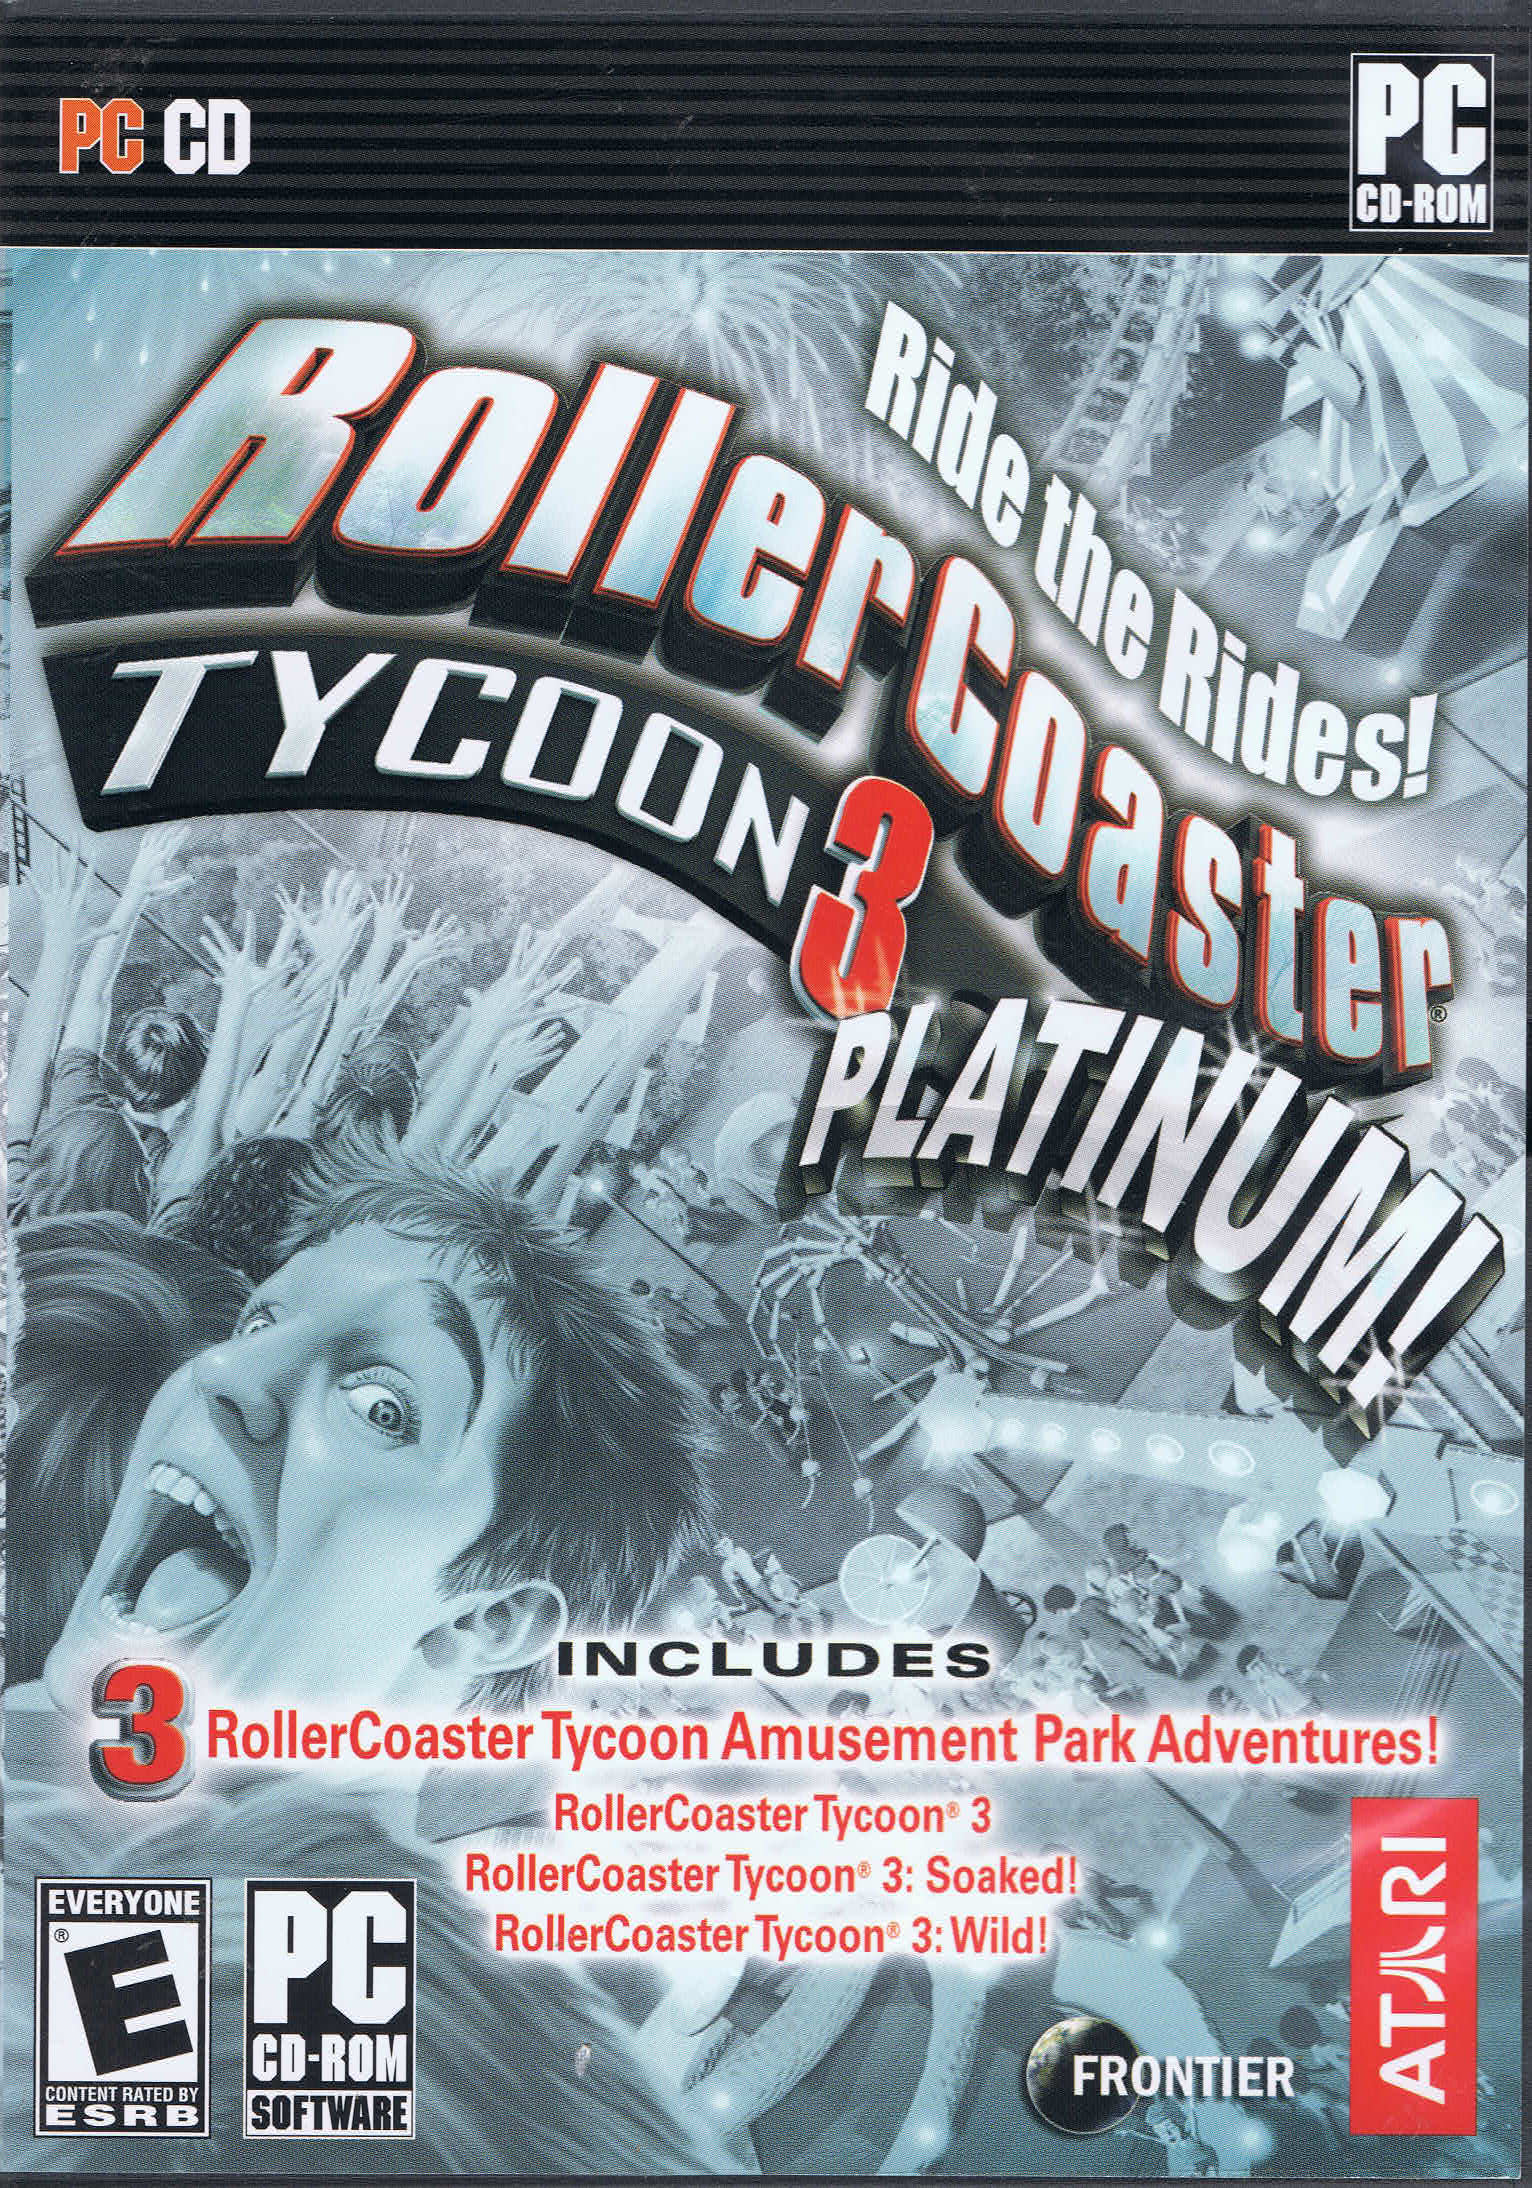 RollerCoaster Tycoon 3: Platinum! Details Games Database